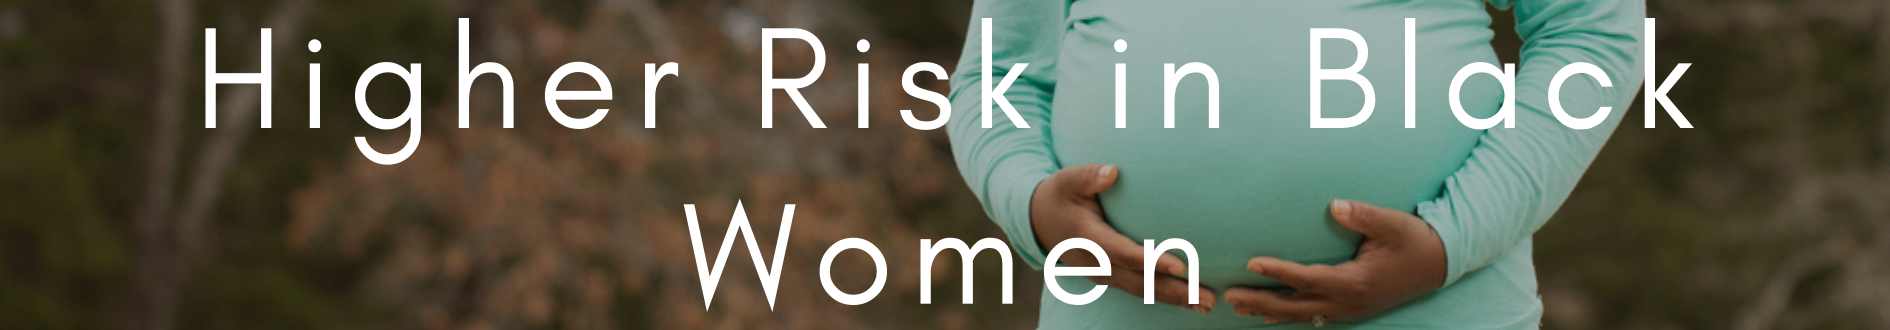 Higher Risk in Black Women